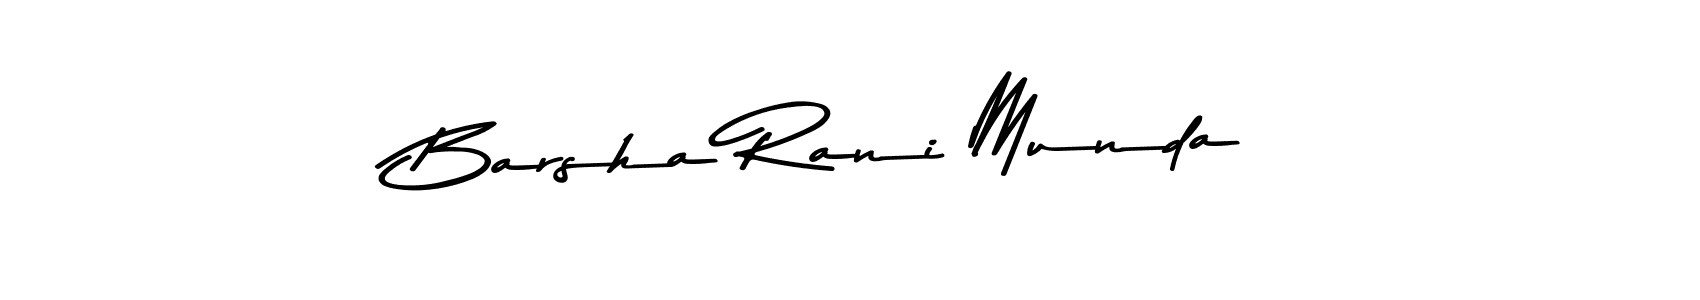 How to Draw Barsha Rani Munda signature style? Asem Kandis PERSONAL USE is a latest design signature styles for name Barsha Rani Munda. Barsha Rani Munda signature style 9 images and pictures png